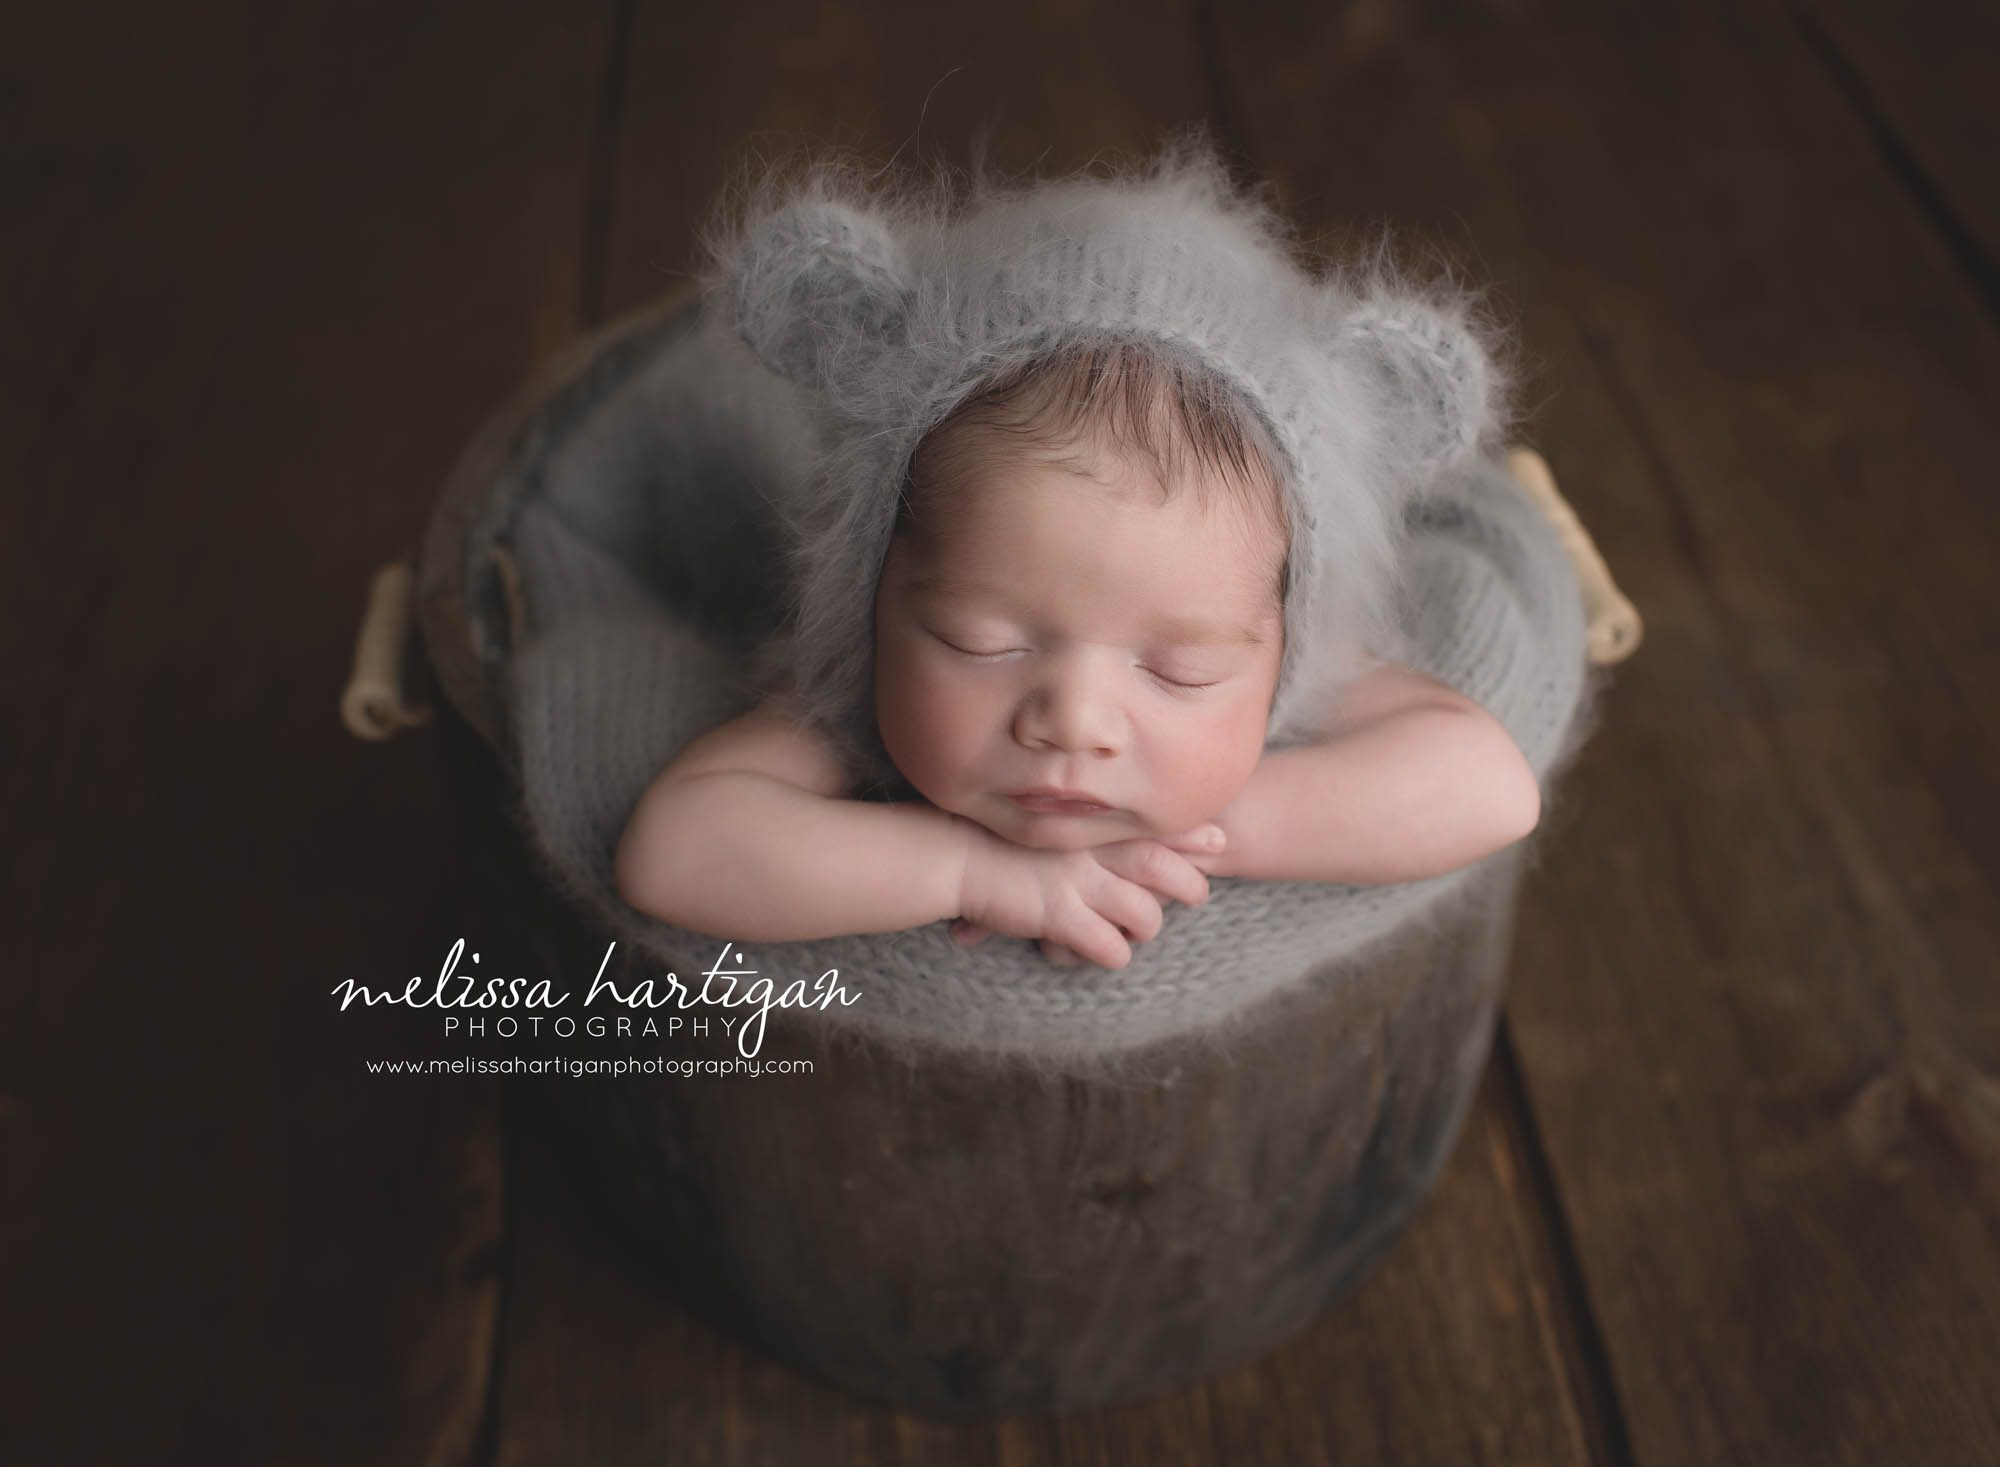 CT Newborn Photographer baby boy sleeping in wooden bucket with gray knit hat